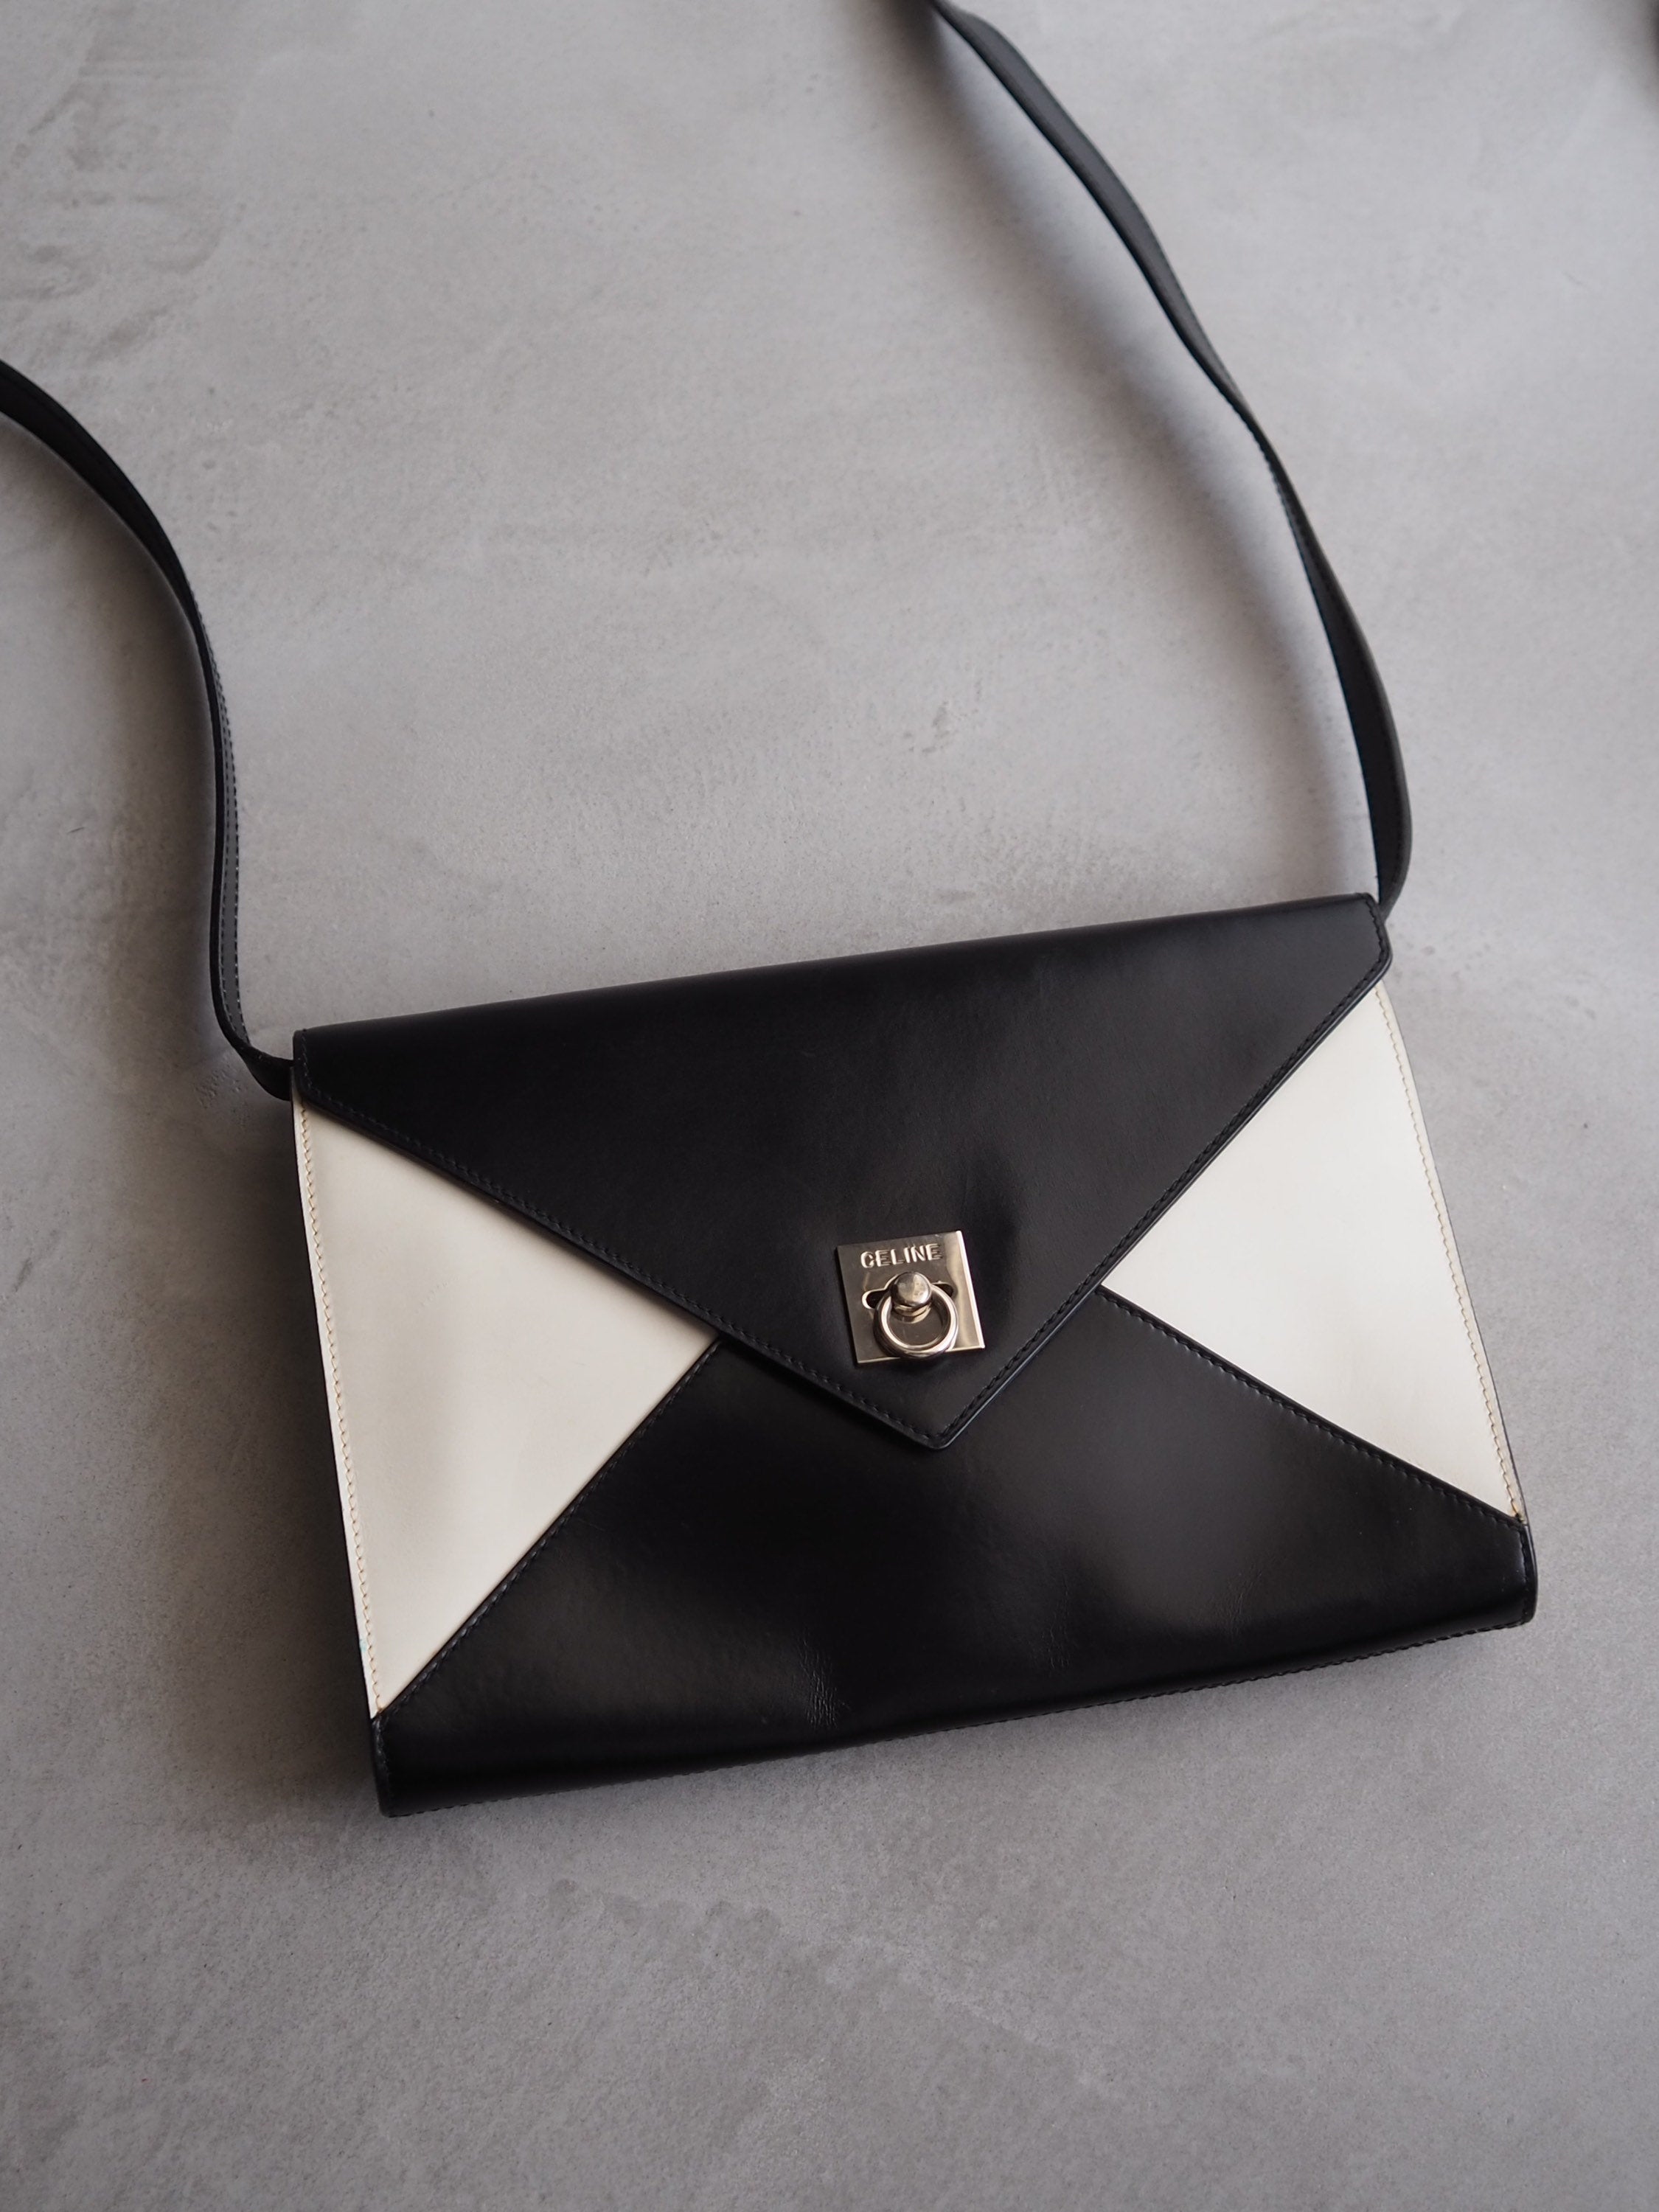 CELINE Shoulder Cross Body Bag Leather Black White Bicolor Vintage Authentic